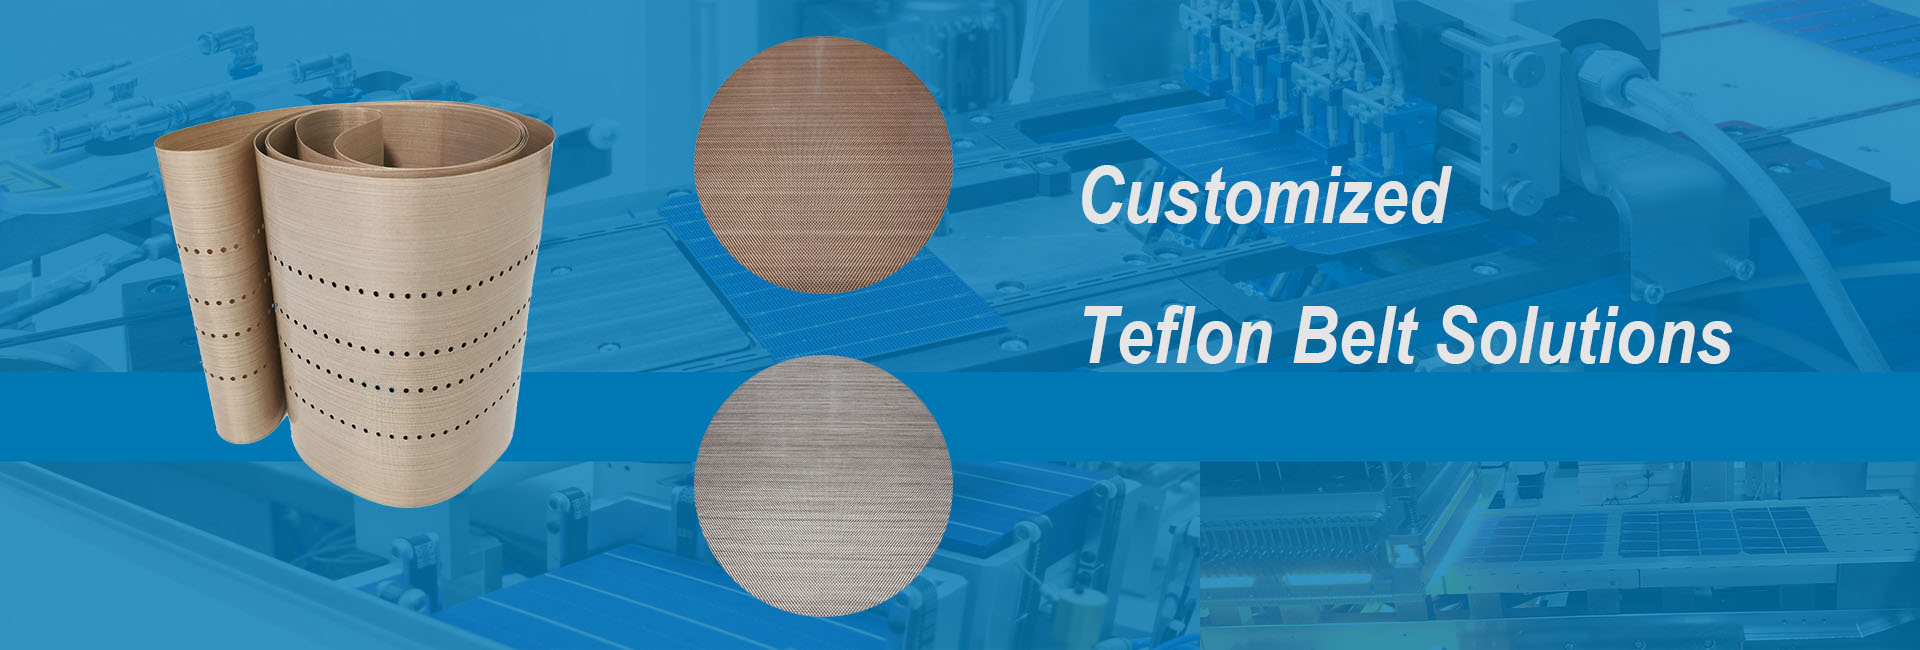 Customized Teflon Belt Solutions